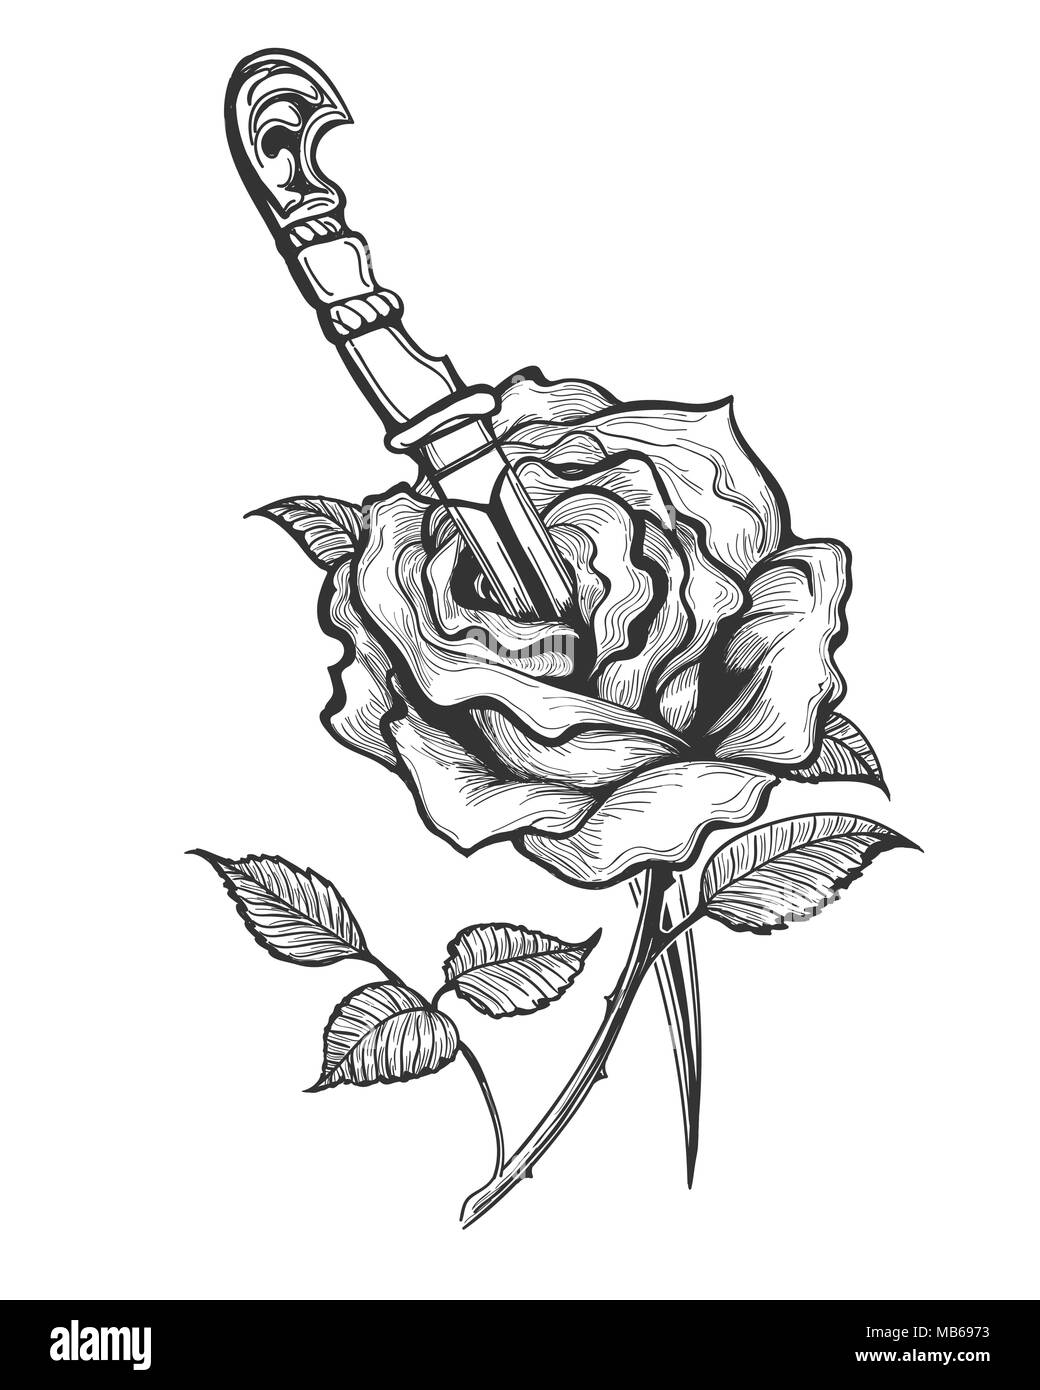 Tatuaggio di Rose fiore piersed dal pugnale. Illustrazione Vettoriale. Illustrazione Vettoriale